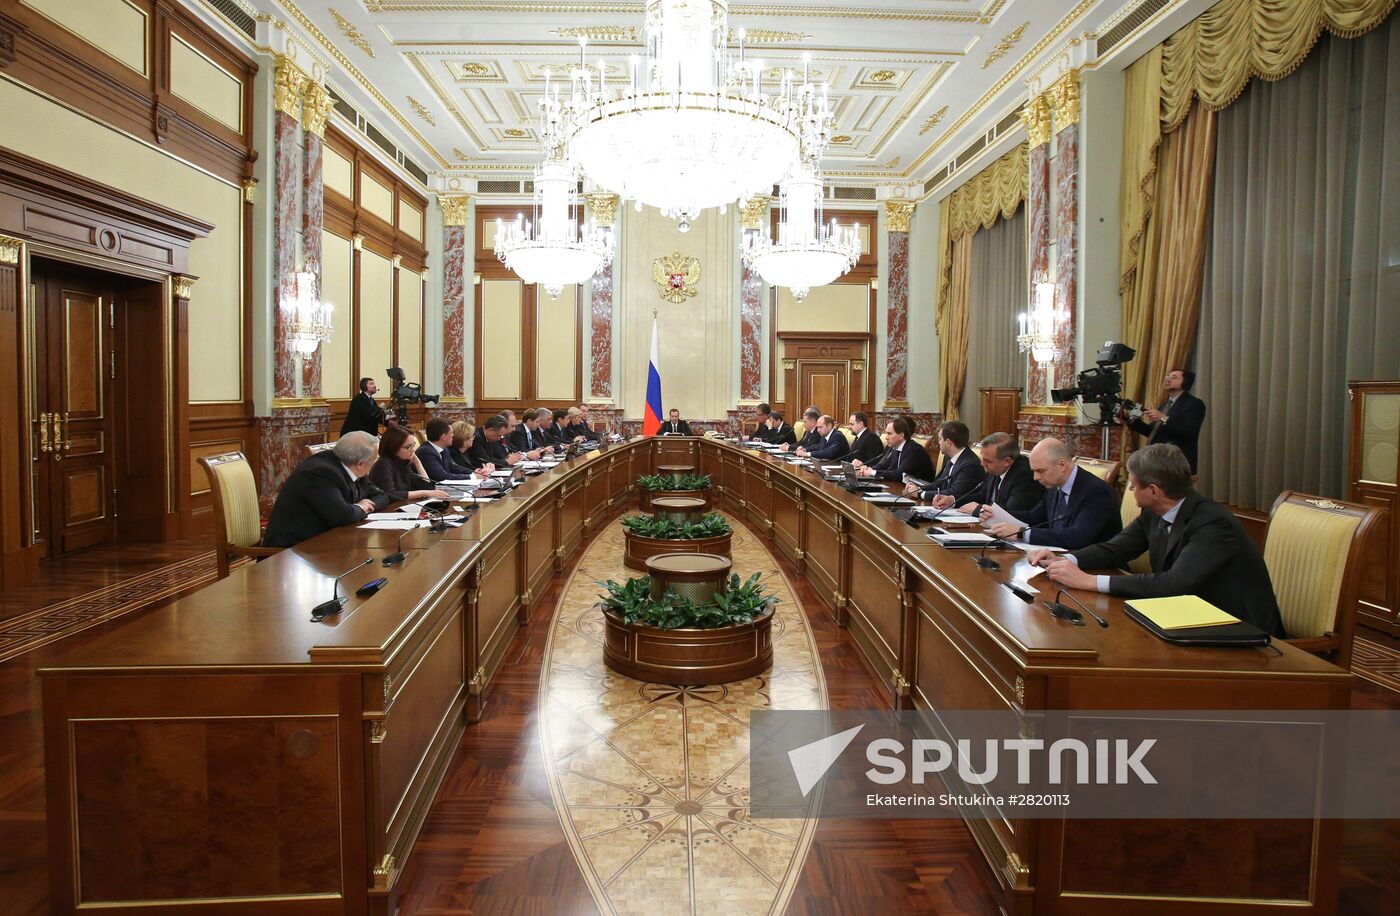 Prime Minister Dmitry Medvedev at Government meeting